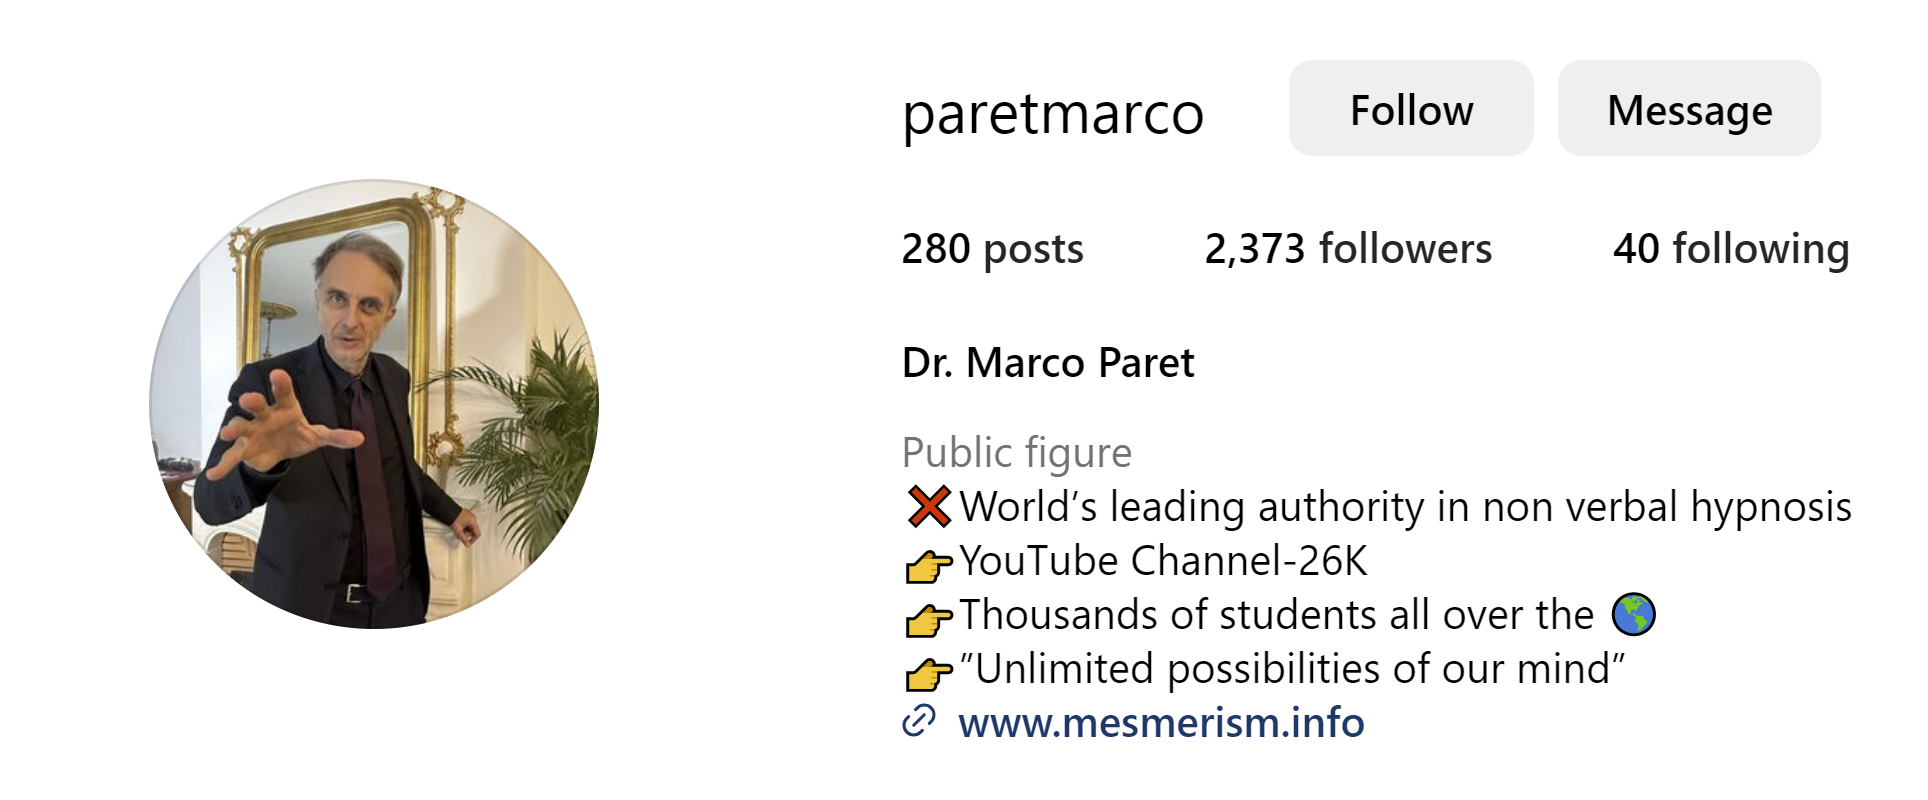 Who Is Dr. Marco Paret